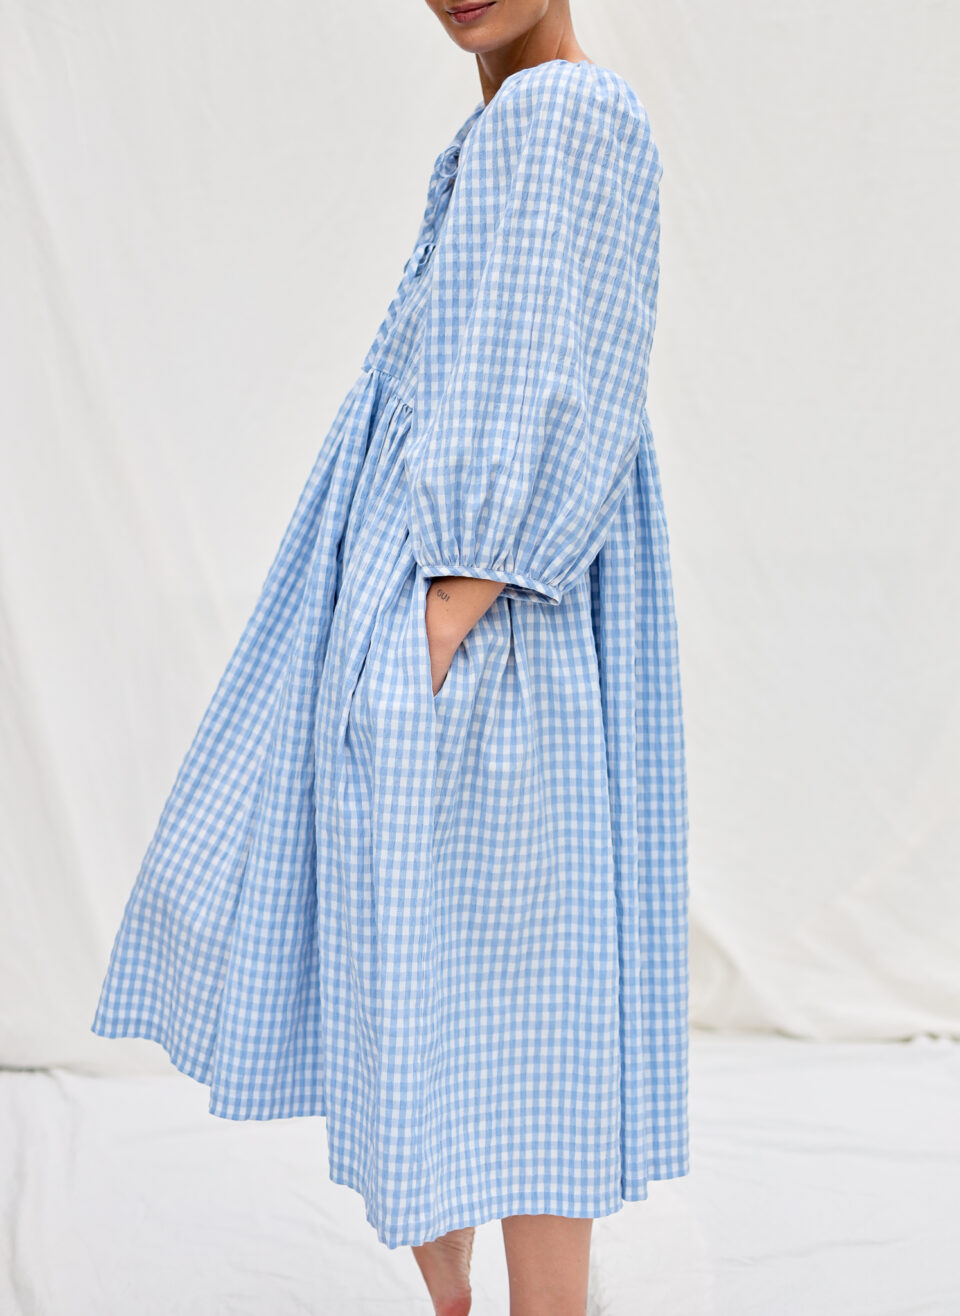 Reversible light blue seersucker checks oversized dress FELDA | Dress | Sustainable clothing | OffOn clothing